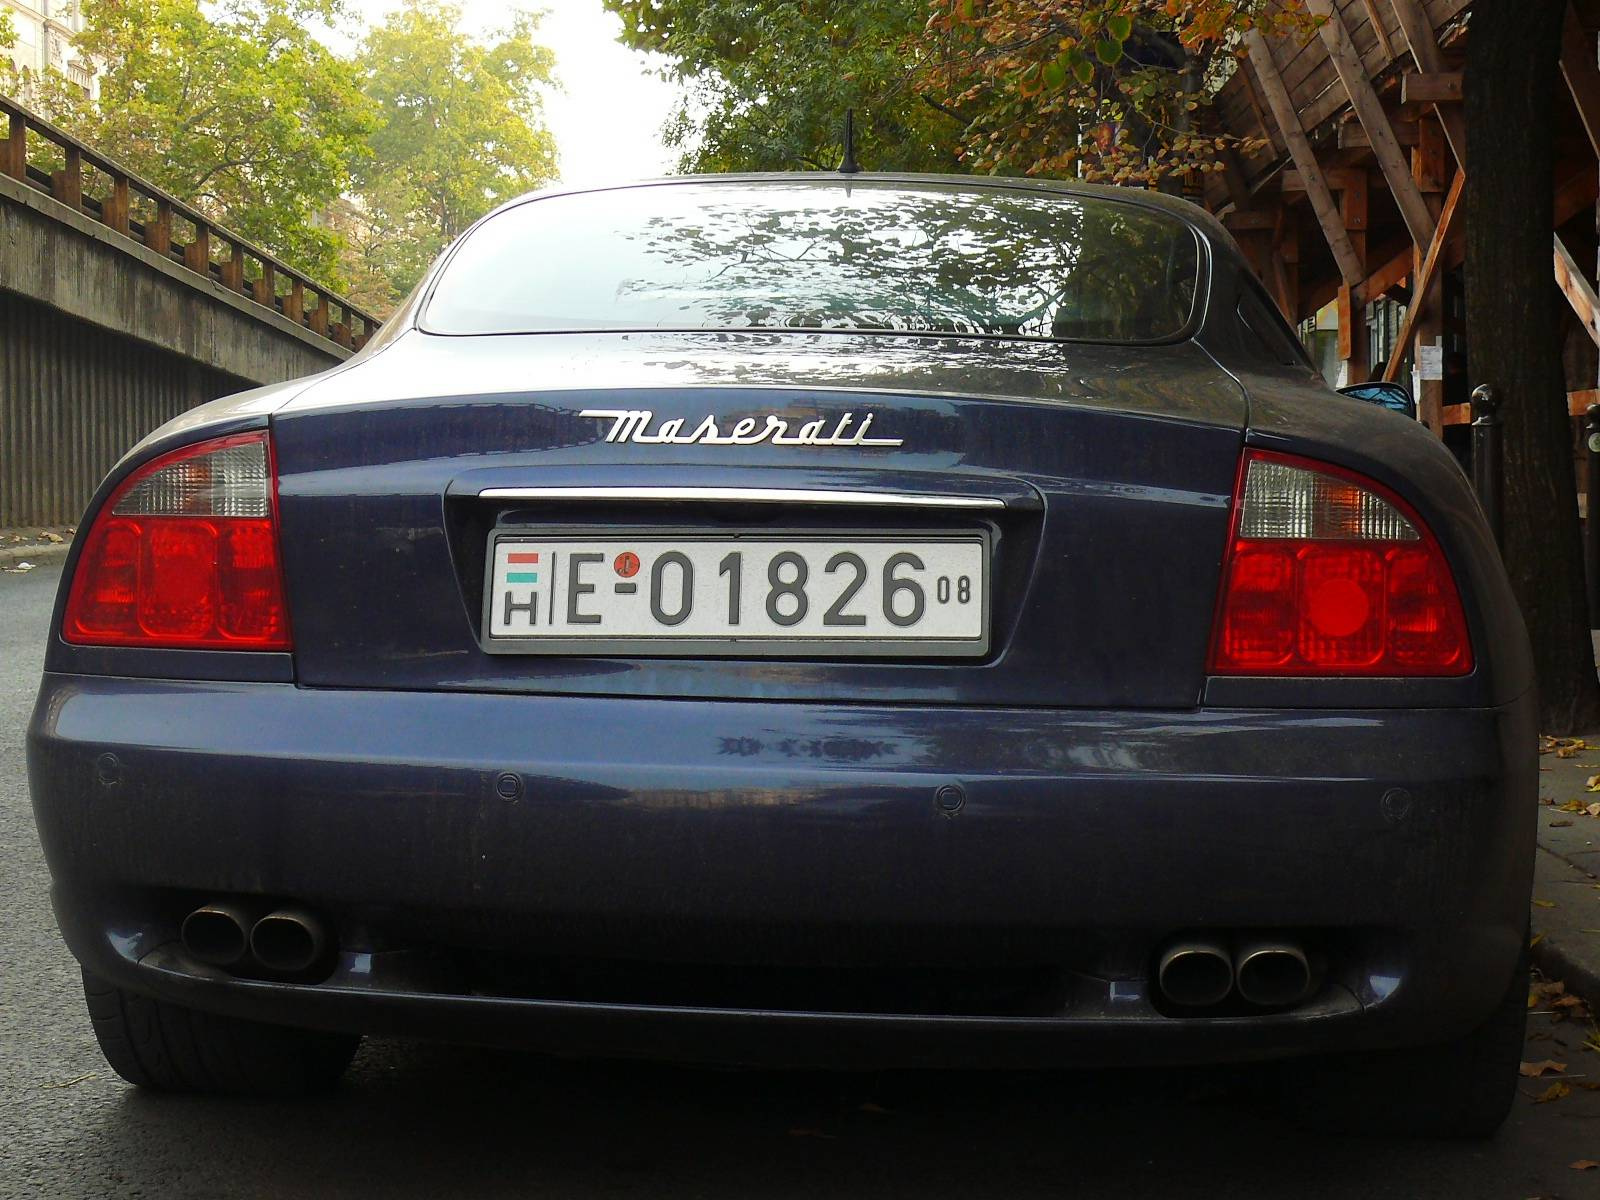 Maserati 4200 GT